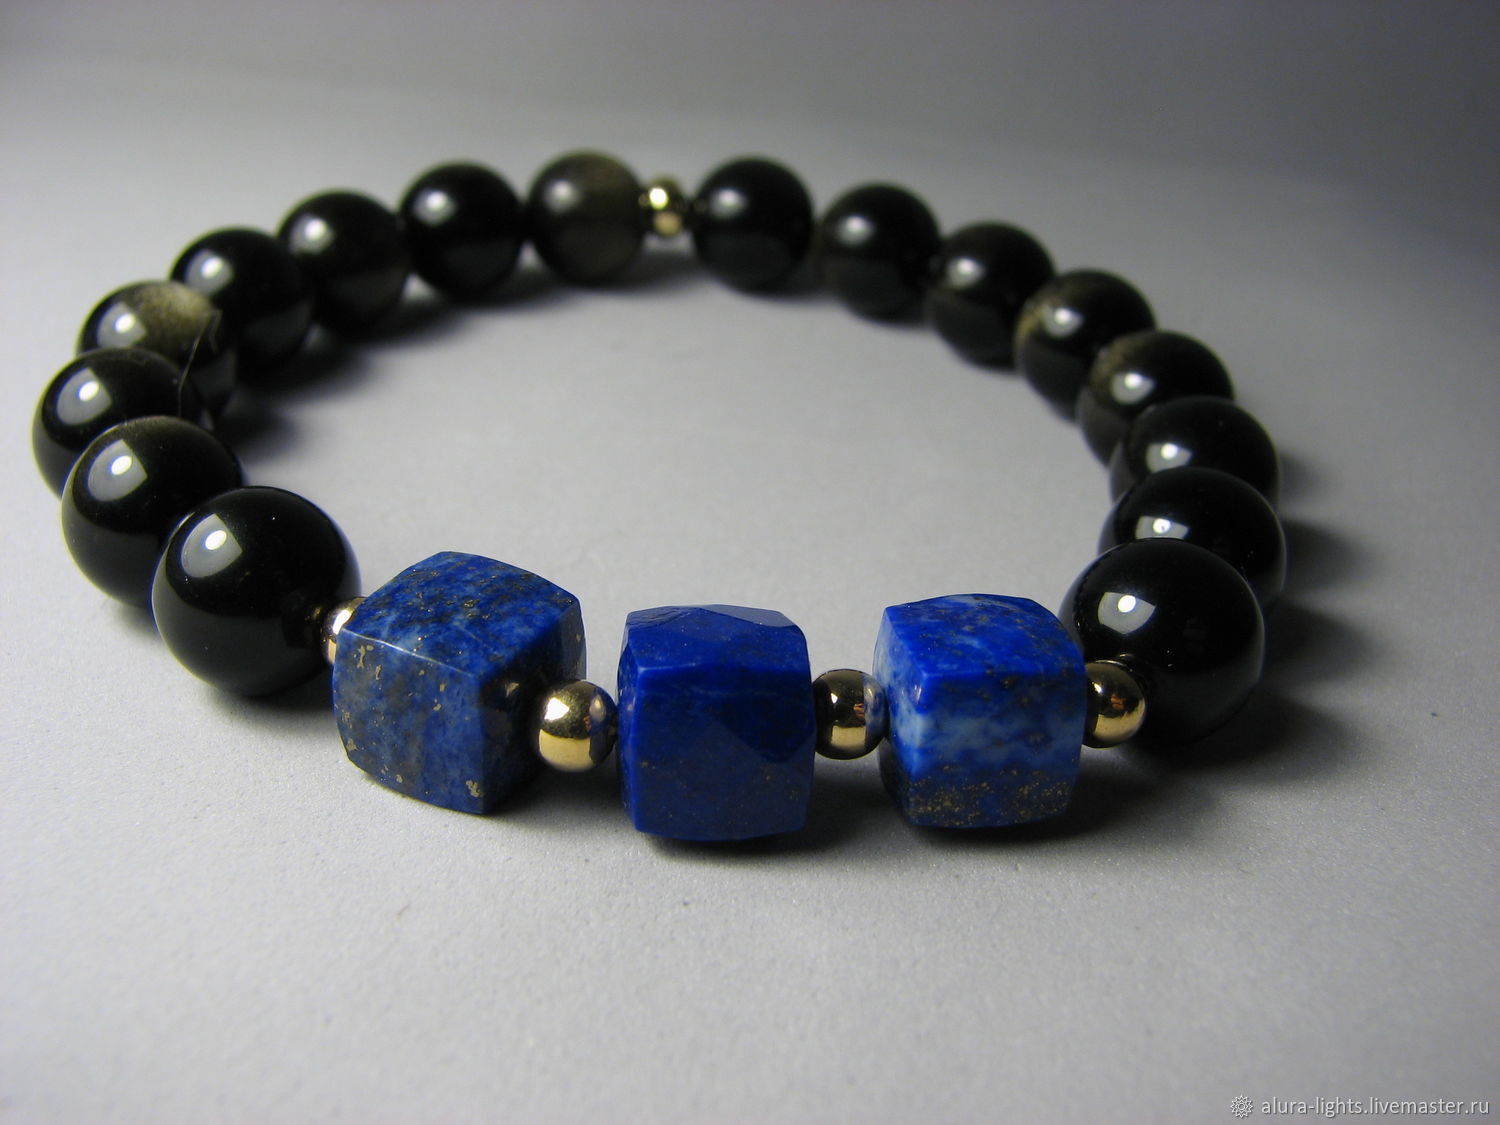 Bracelet with lapis lazuli and obsidian, 'As heaven', Bead bracelet, Moscow,  Фото №1